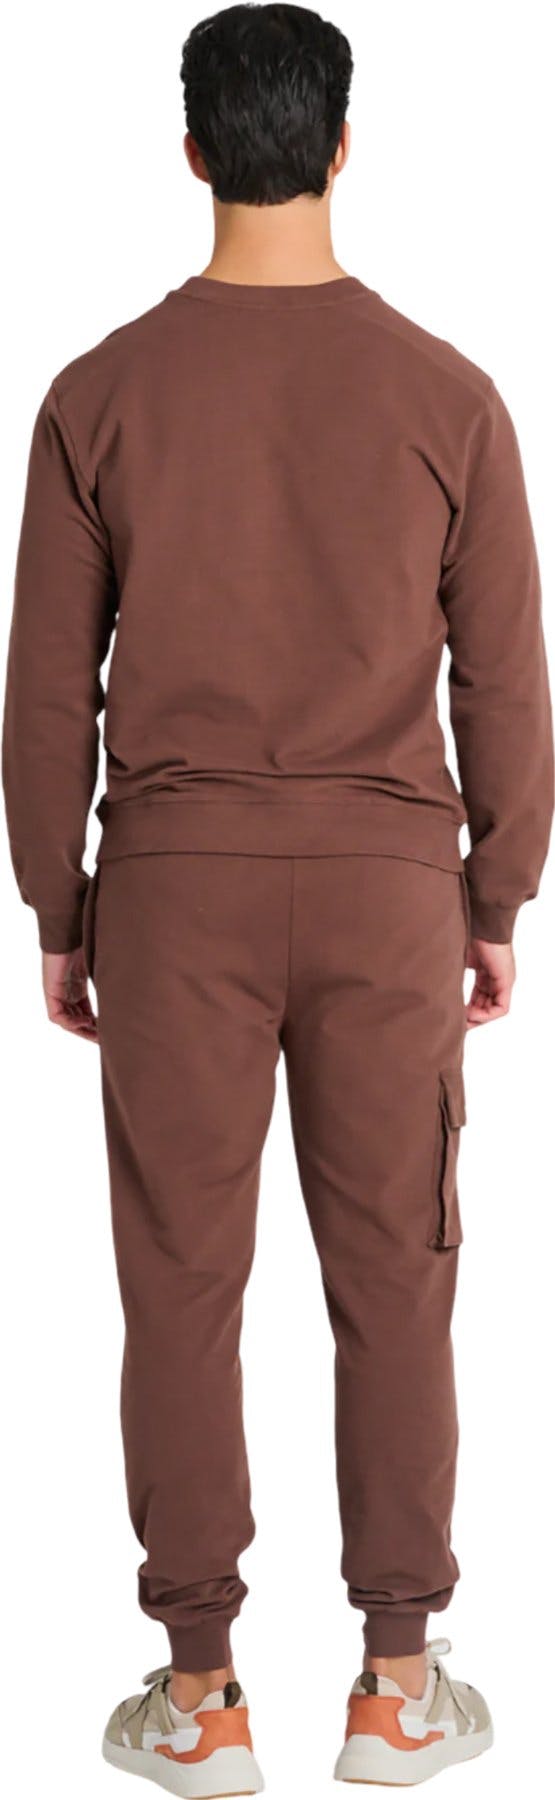 Product gallery image number 2 for product Organic Comfort Crewneck Sweatshirt - Men's